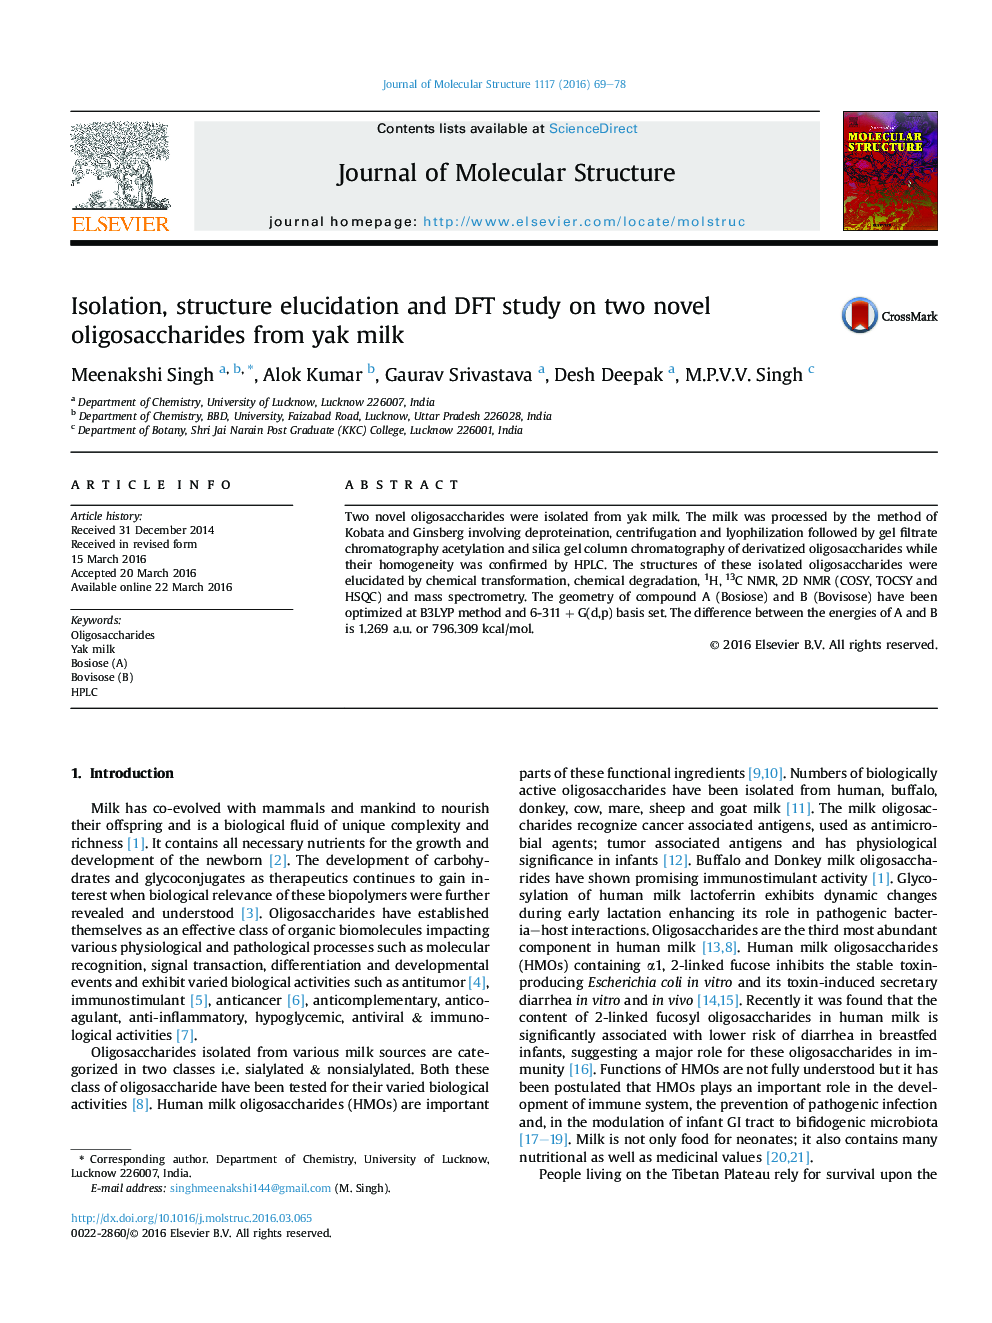 Isolation, structure elucidation and DFT study on two novel oligosaccharides from yak milk